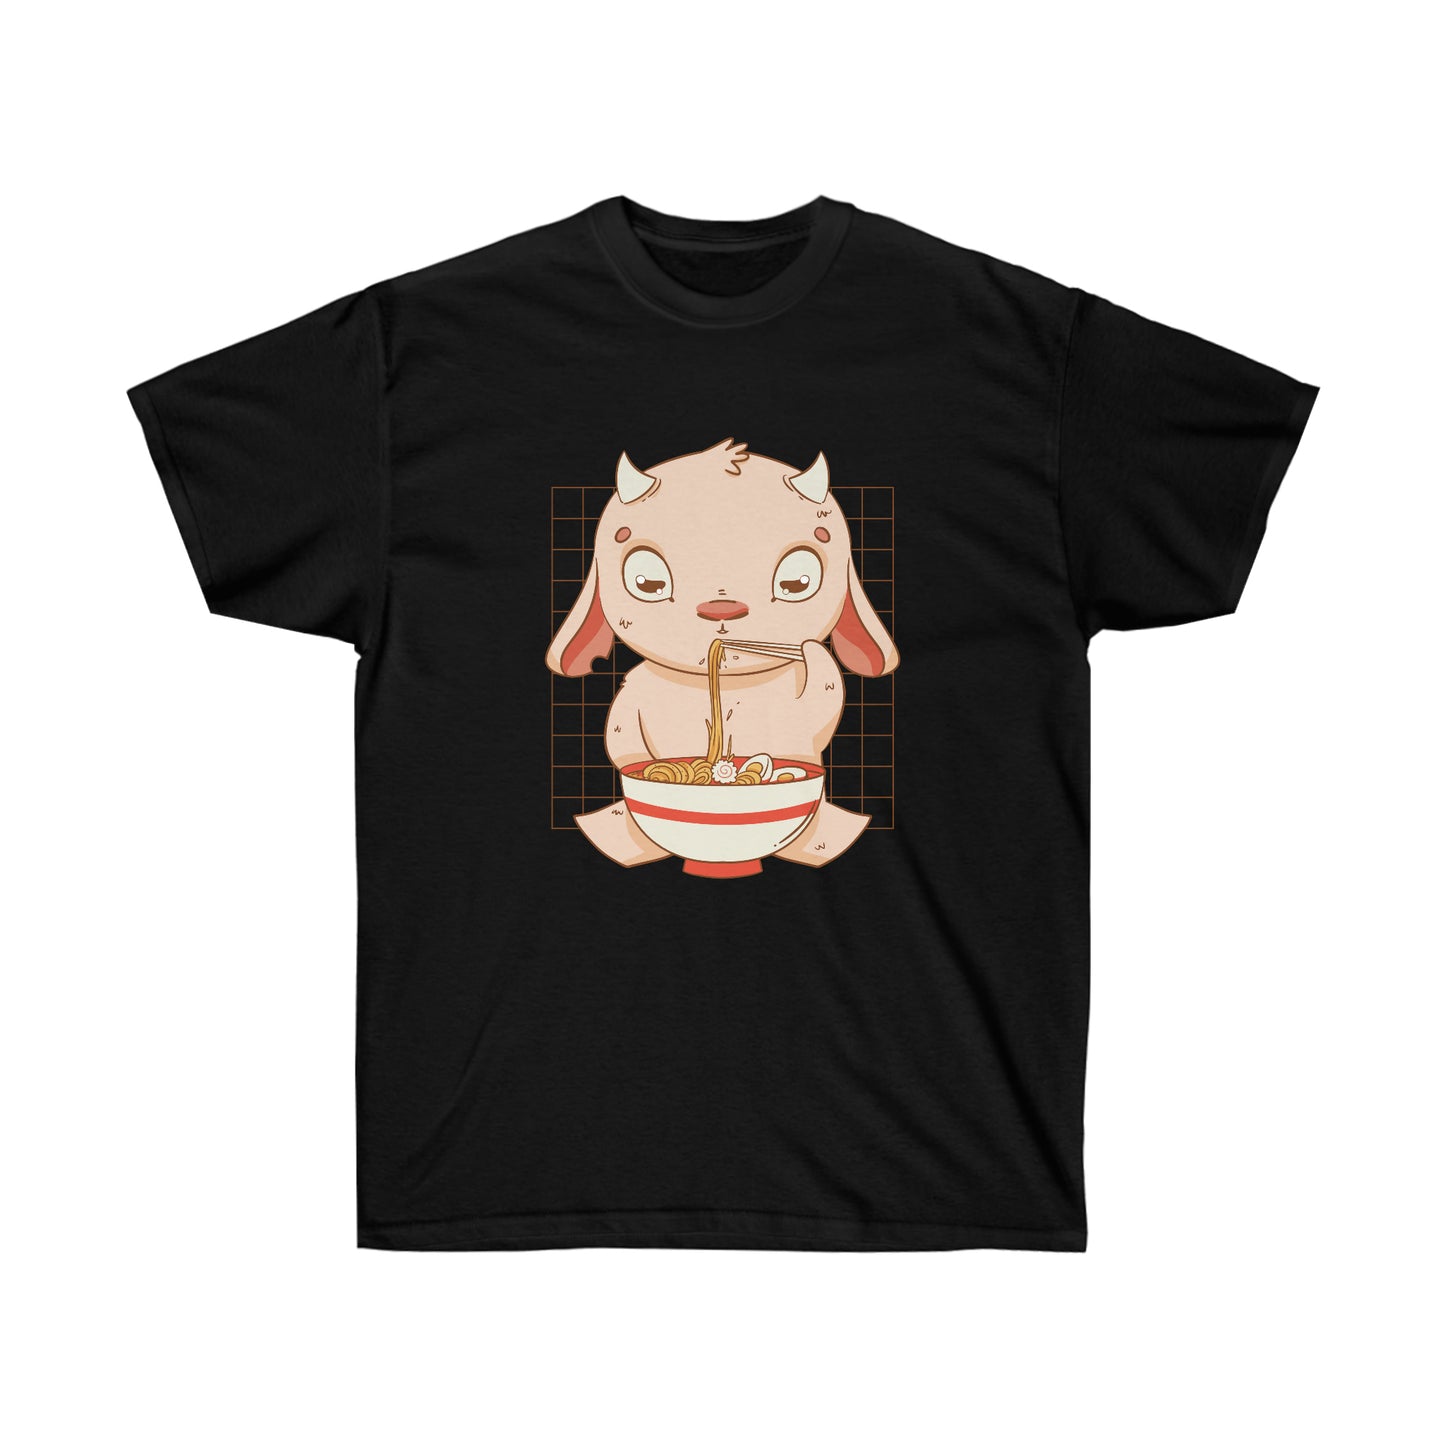 Kawaii Aesthetic, Yami Kawaii, Japanese Aesthetic Otaku Cute Axolotl T-Shirt